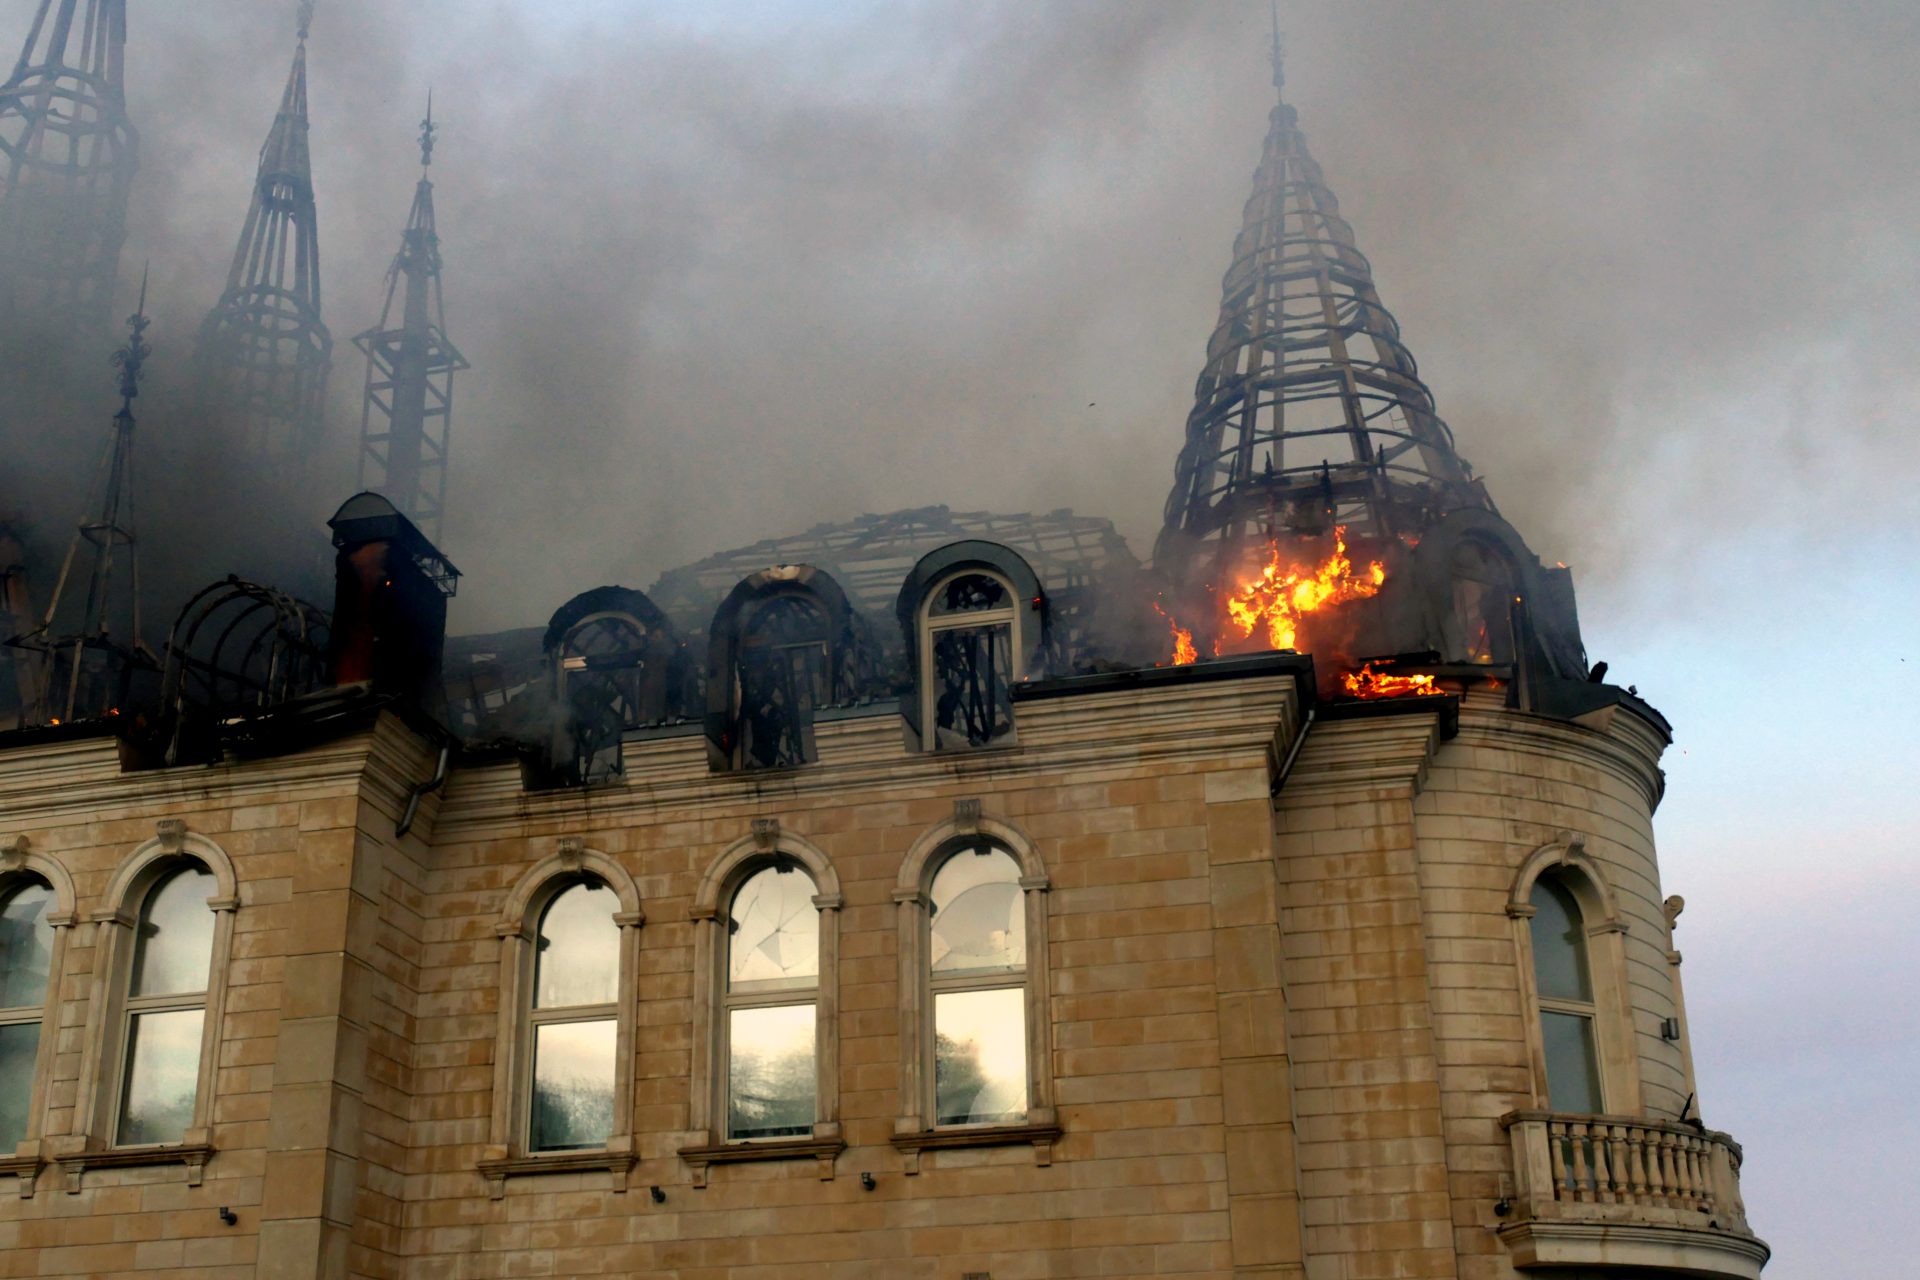 'Harry Potter Castle' burns near Odessa